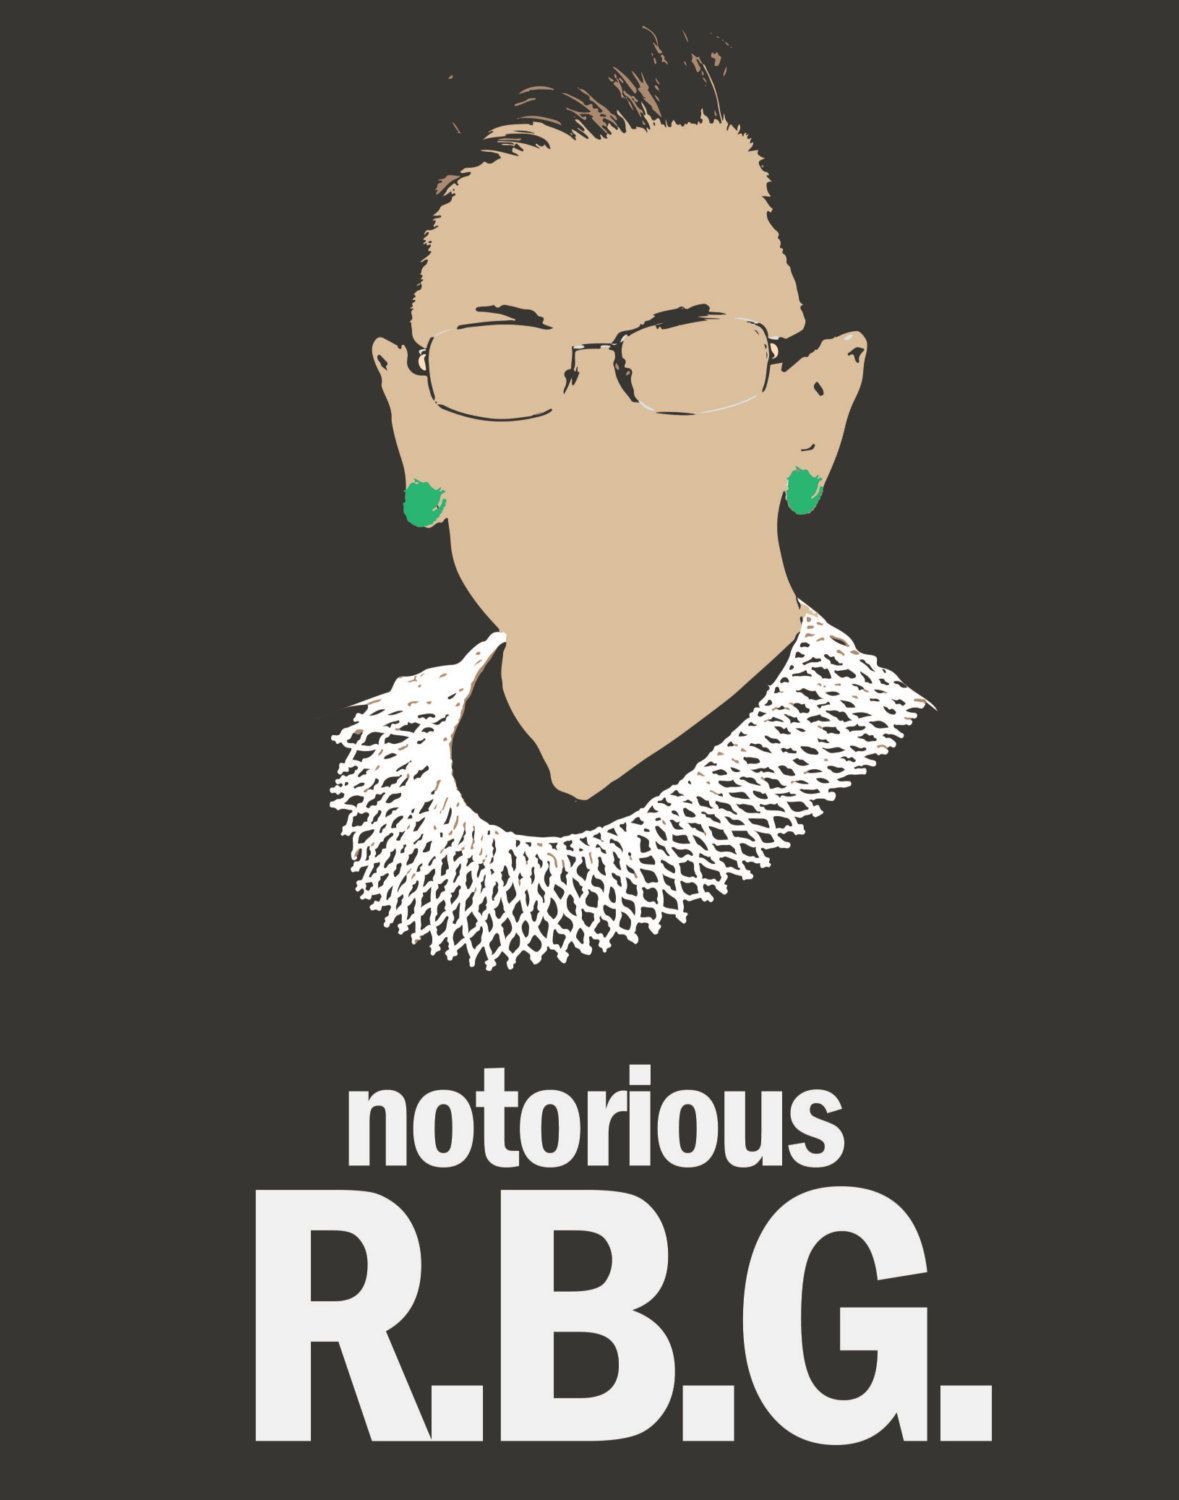 Best RBG image. ruth bader ginsburg, rbg, justice ruth bader ginsburg